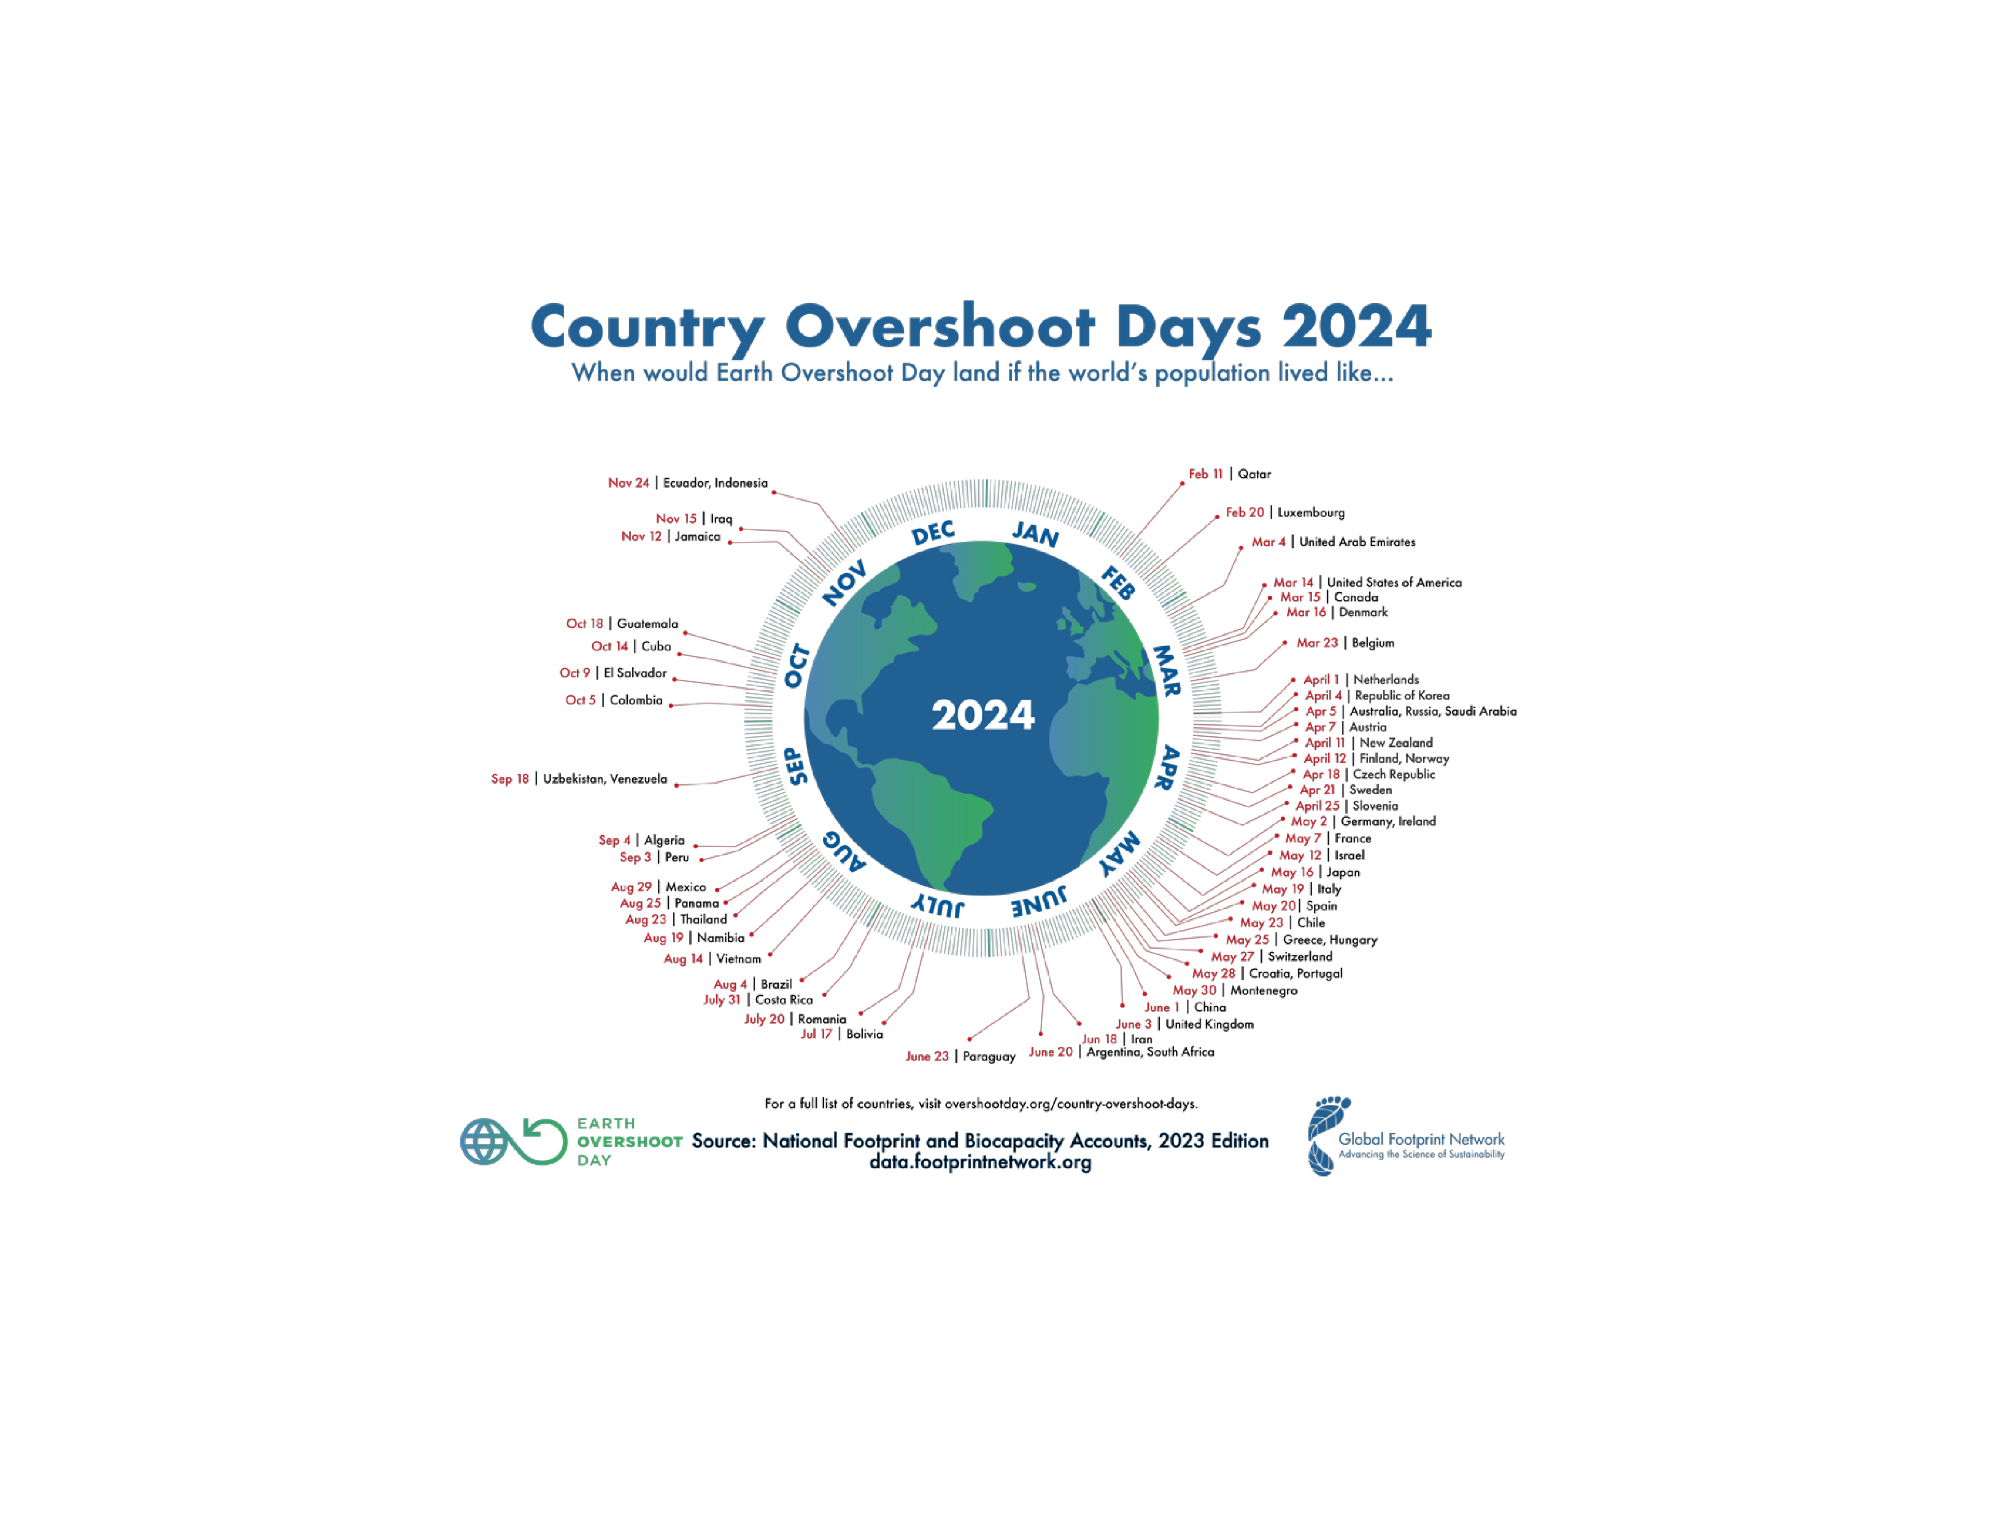 COUNTY OVERSHOOT DAYS 2024